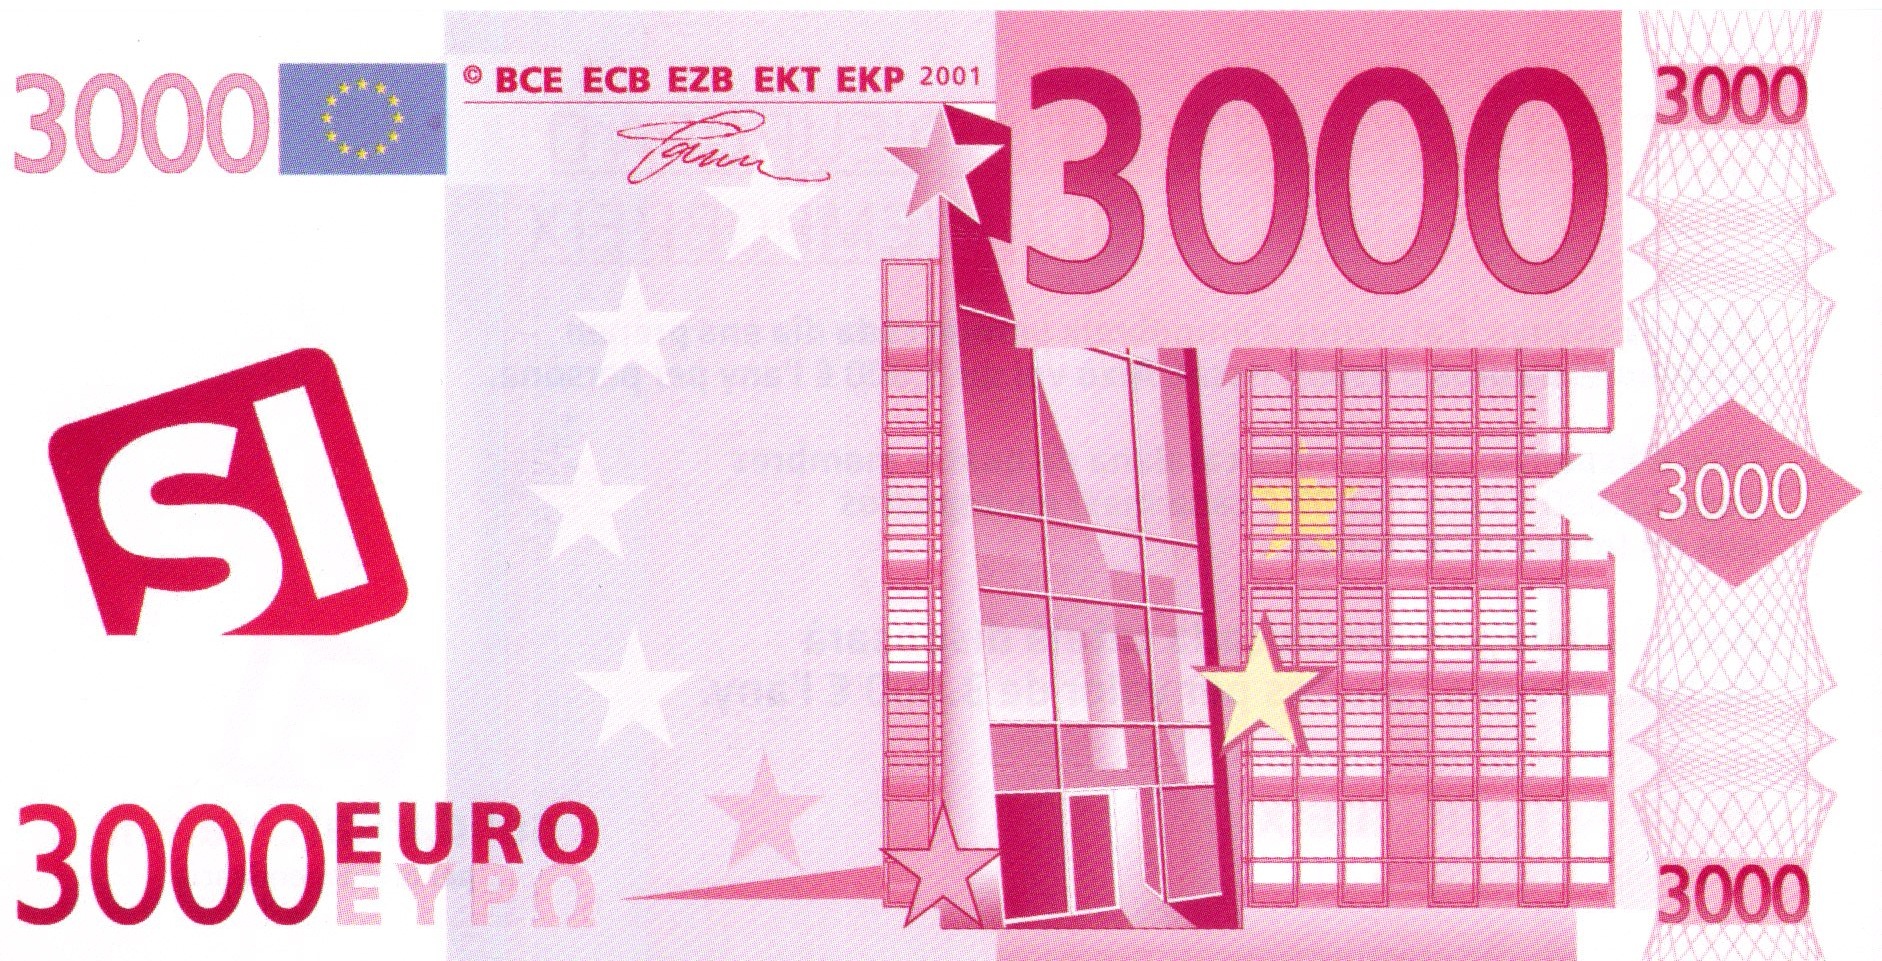 Тысяча евро в долларах. 2000 Евро купюра. Деньги евро. 1000 Евро купюра. Изображение евро купюр.